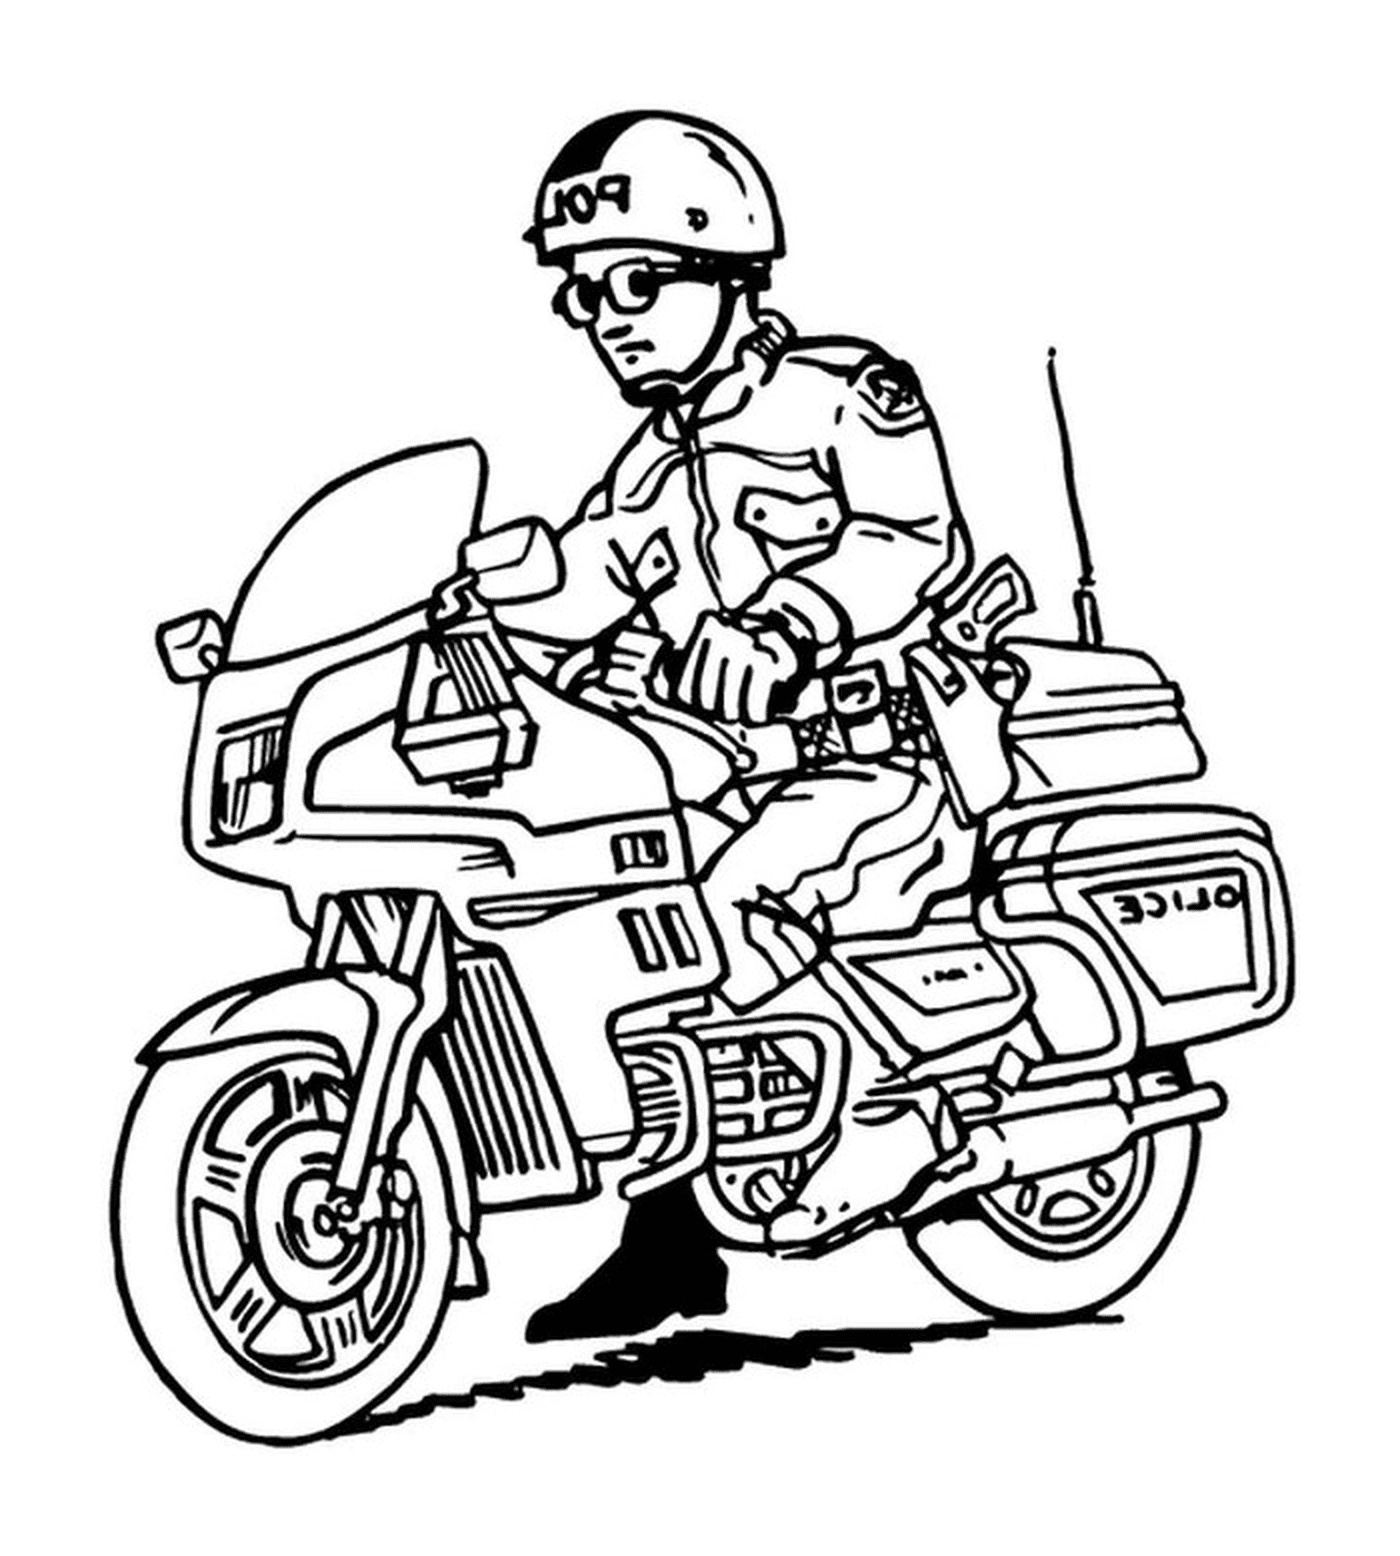  Policial de motocicleta fácil 